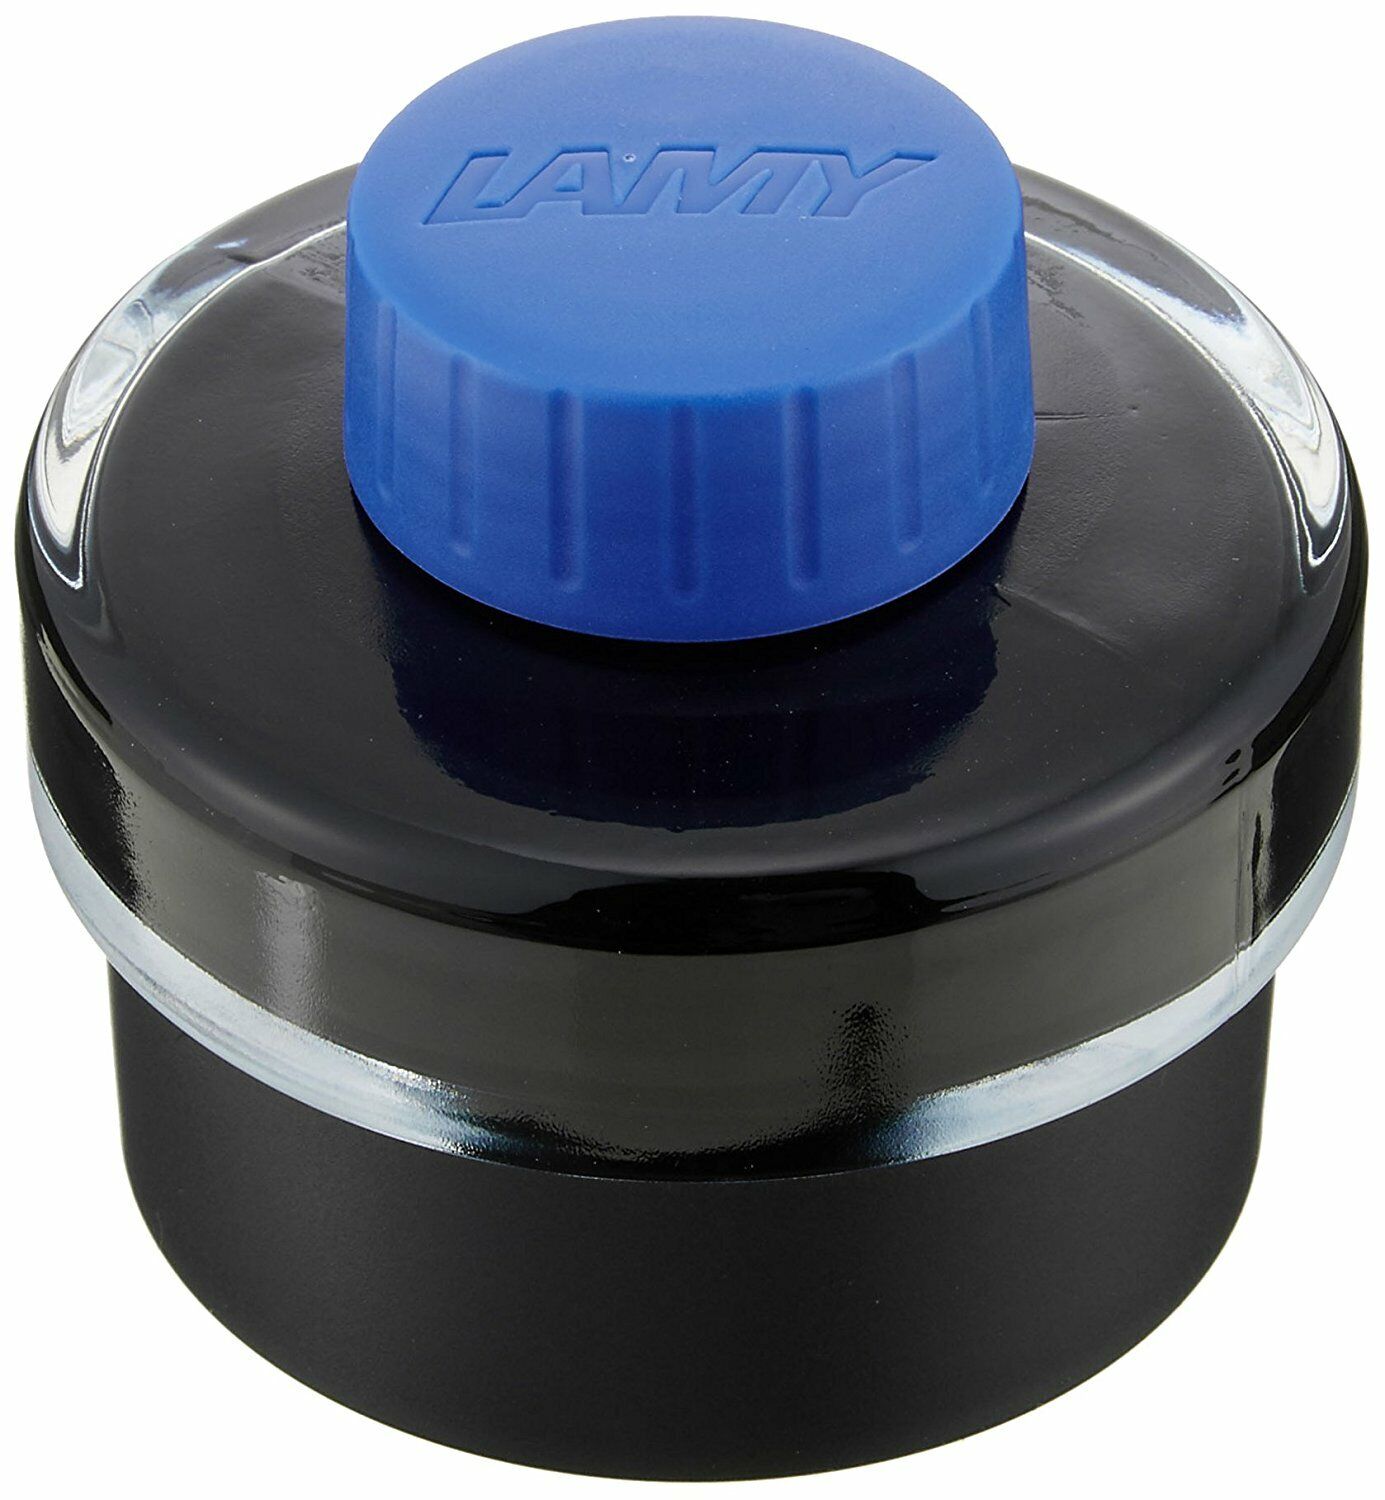 Lamy Bottled Ink- Blue 50 ml Bottle Ink with Blotting Paper LT52BL - NEW in Box